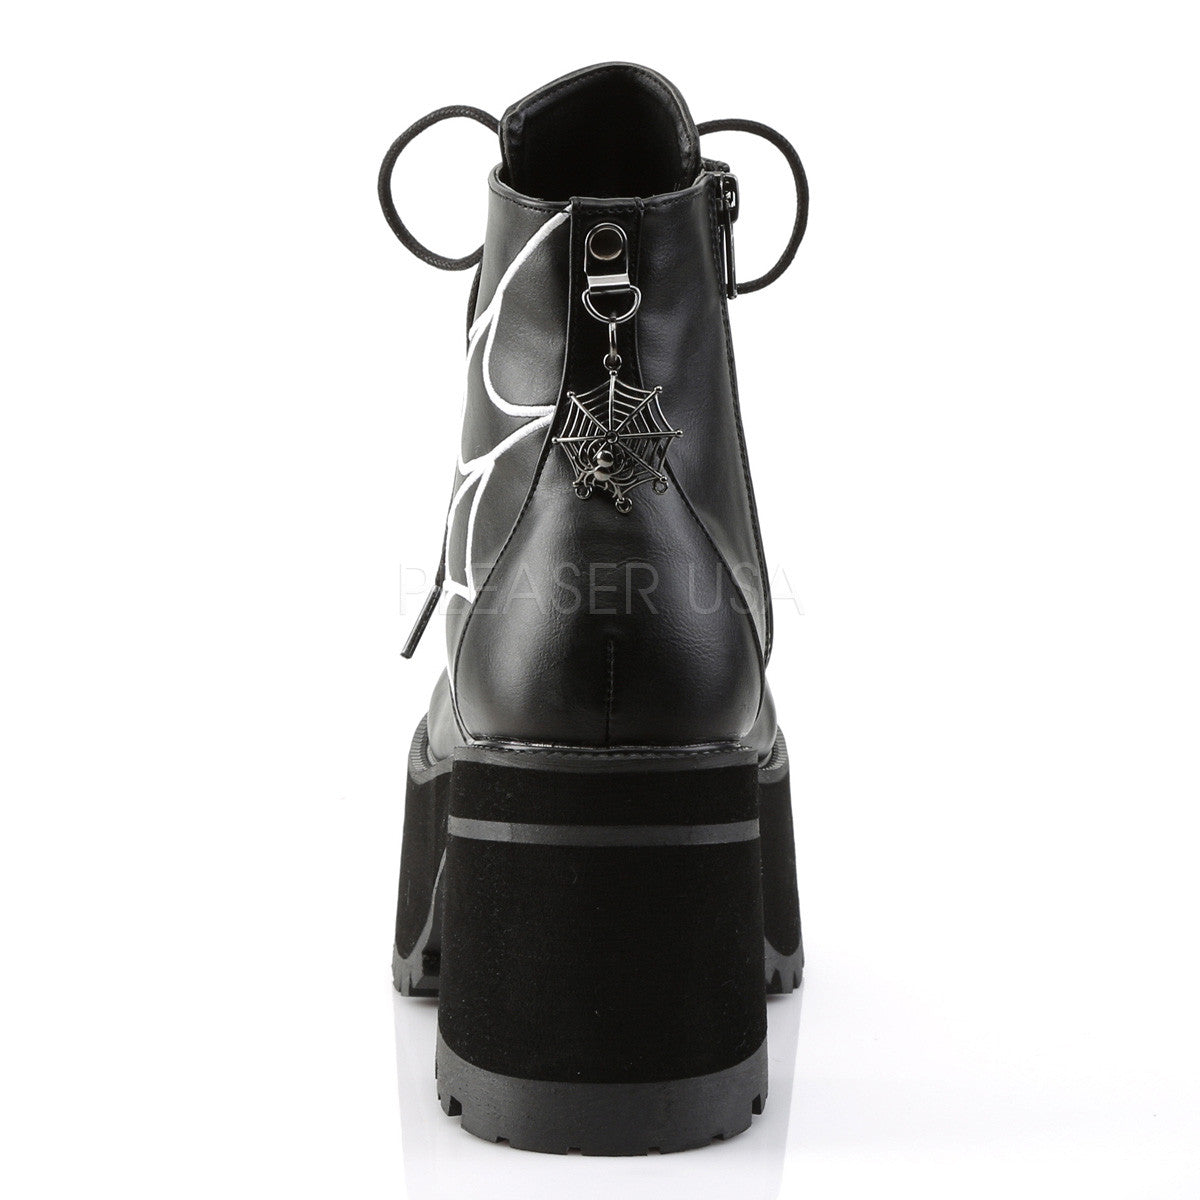 Demonia RANGER-105 Black Spider Web Platform Boots - Shoecup.com - 4